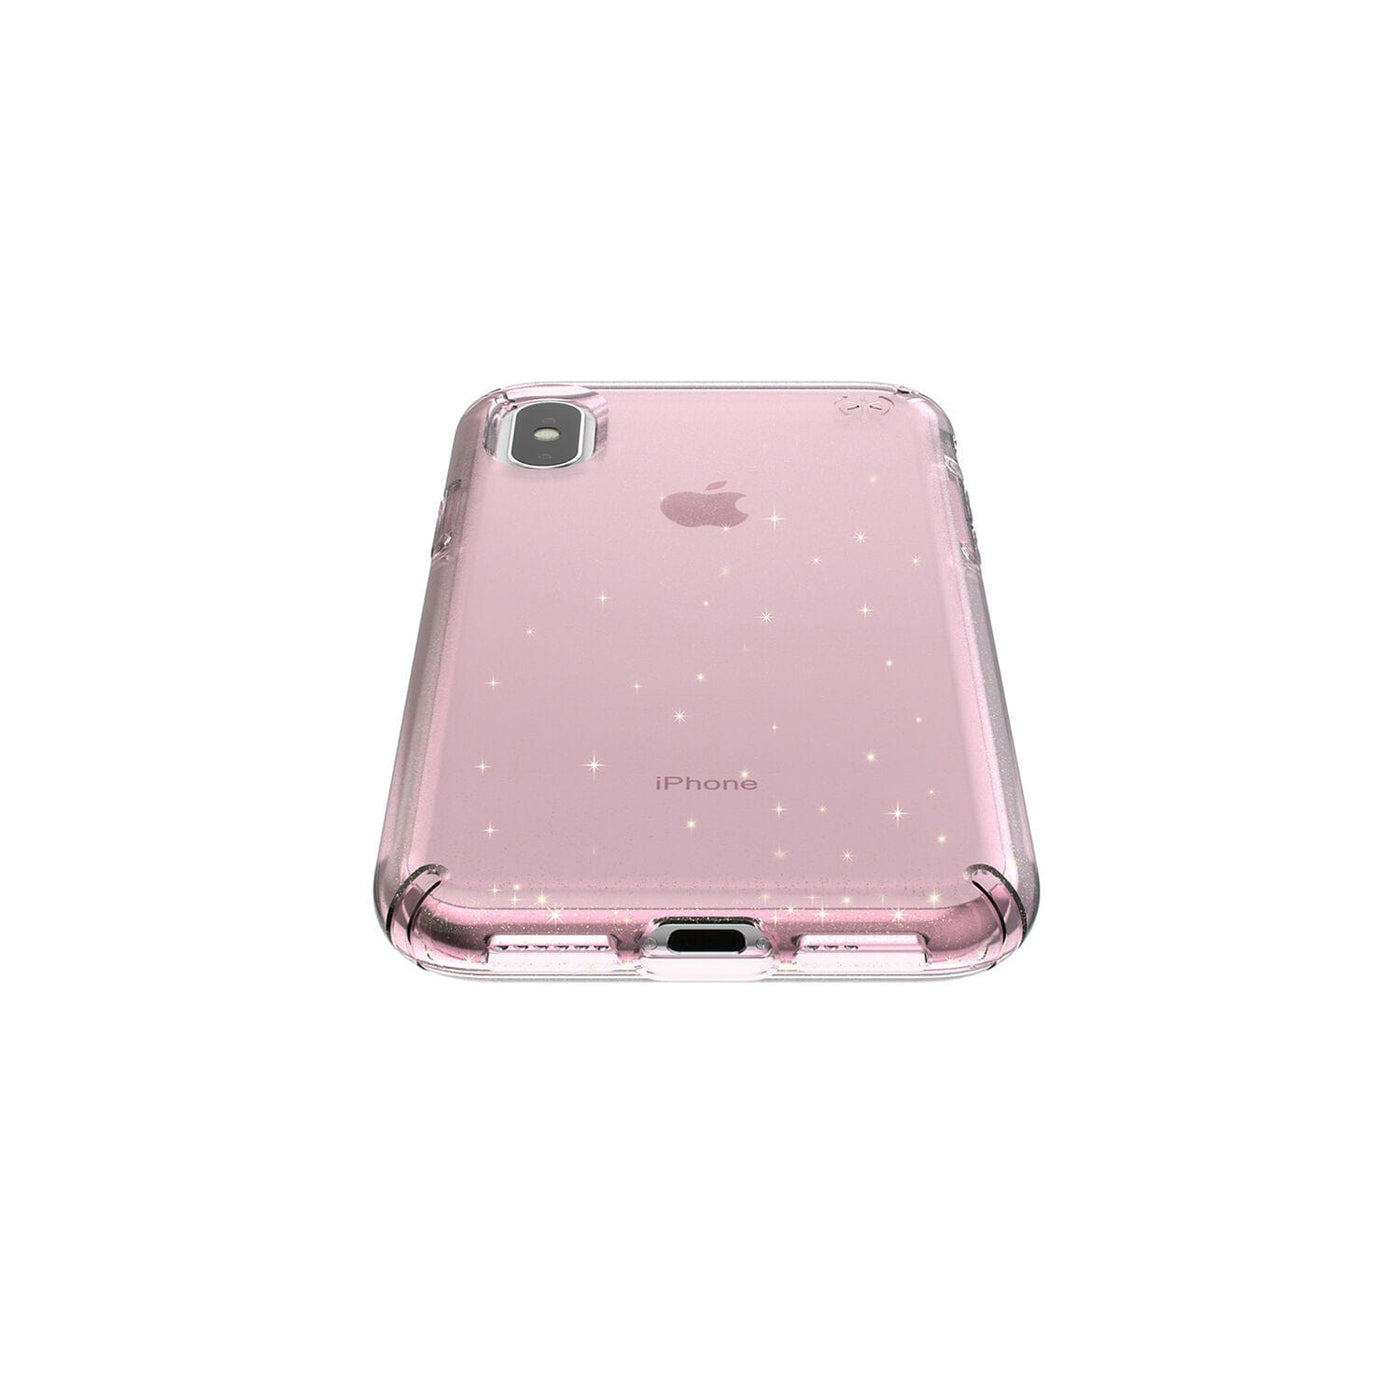 Speck Presidio Clear + Glitter Bella Pink with Gold Glitter iPhone Xs / x Case